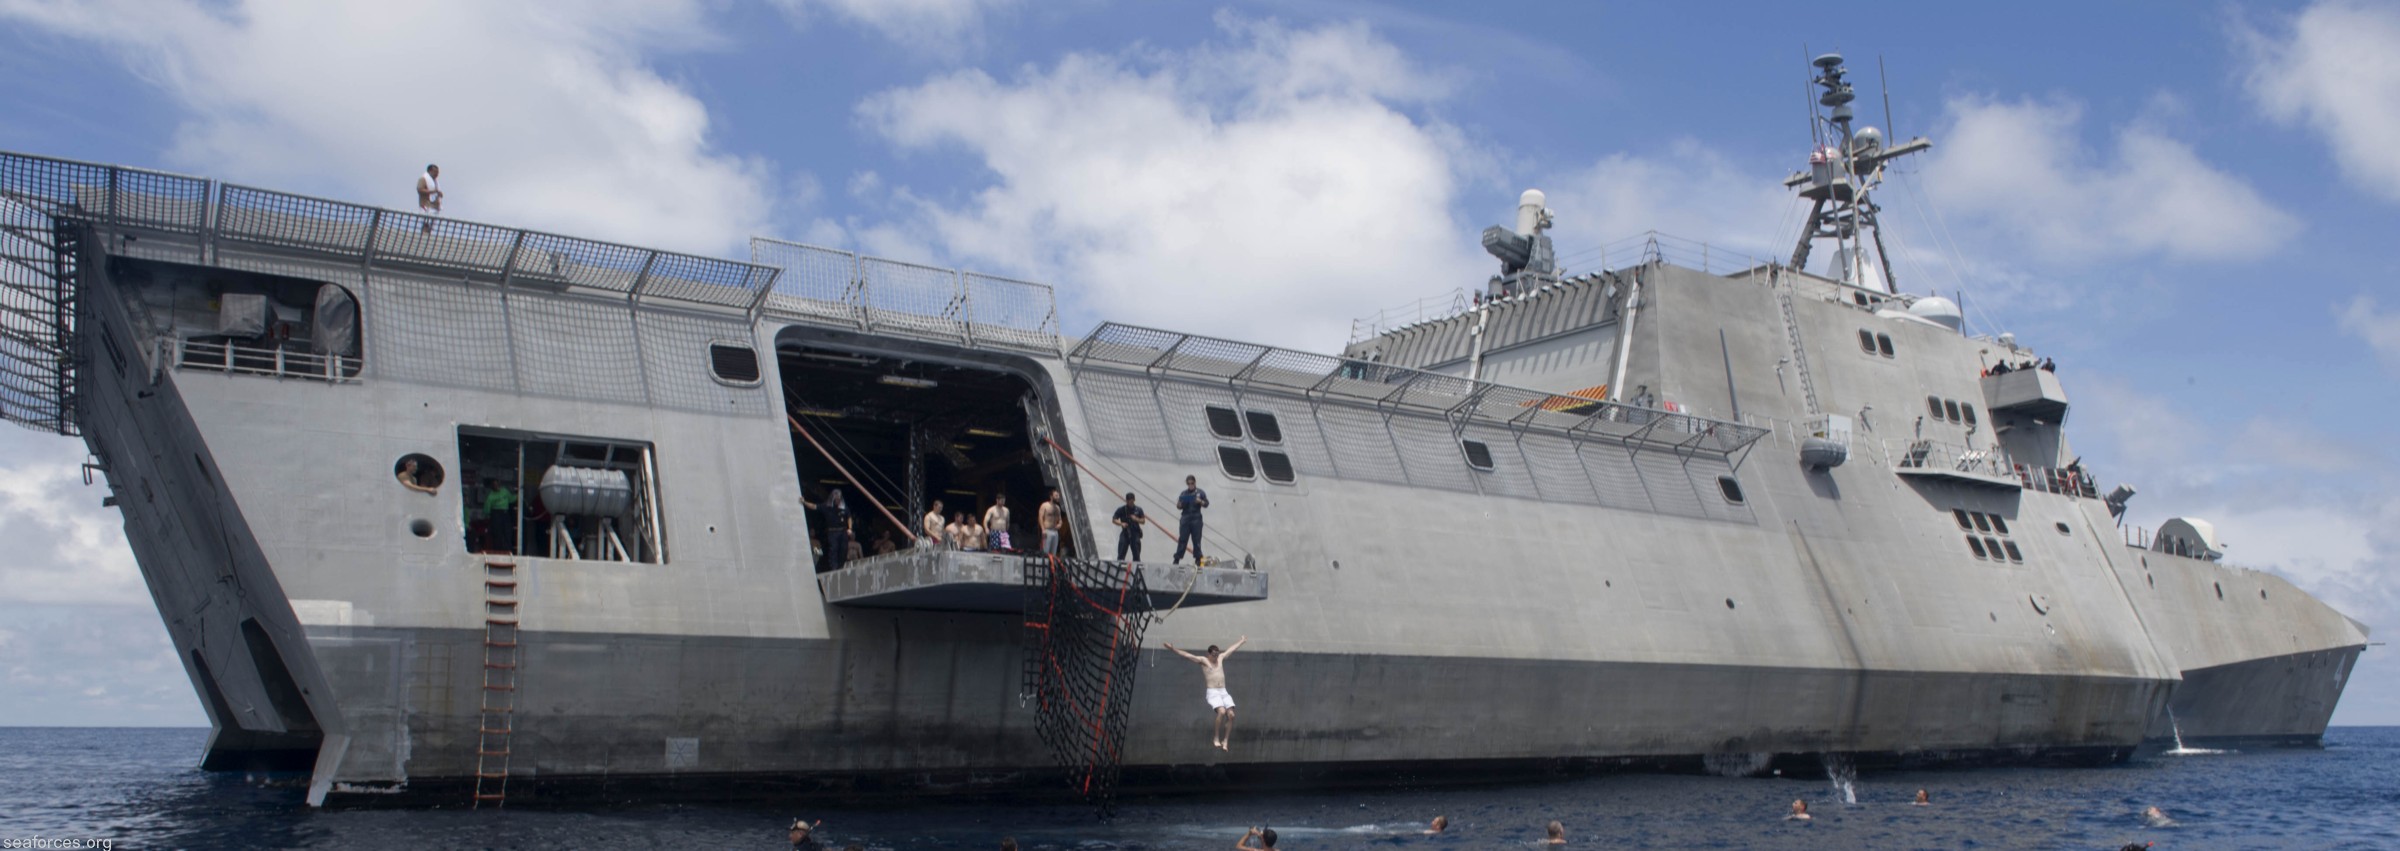 lcs-4 uss coronado independence class littoral combat ship us navy 08